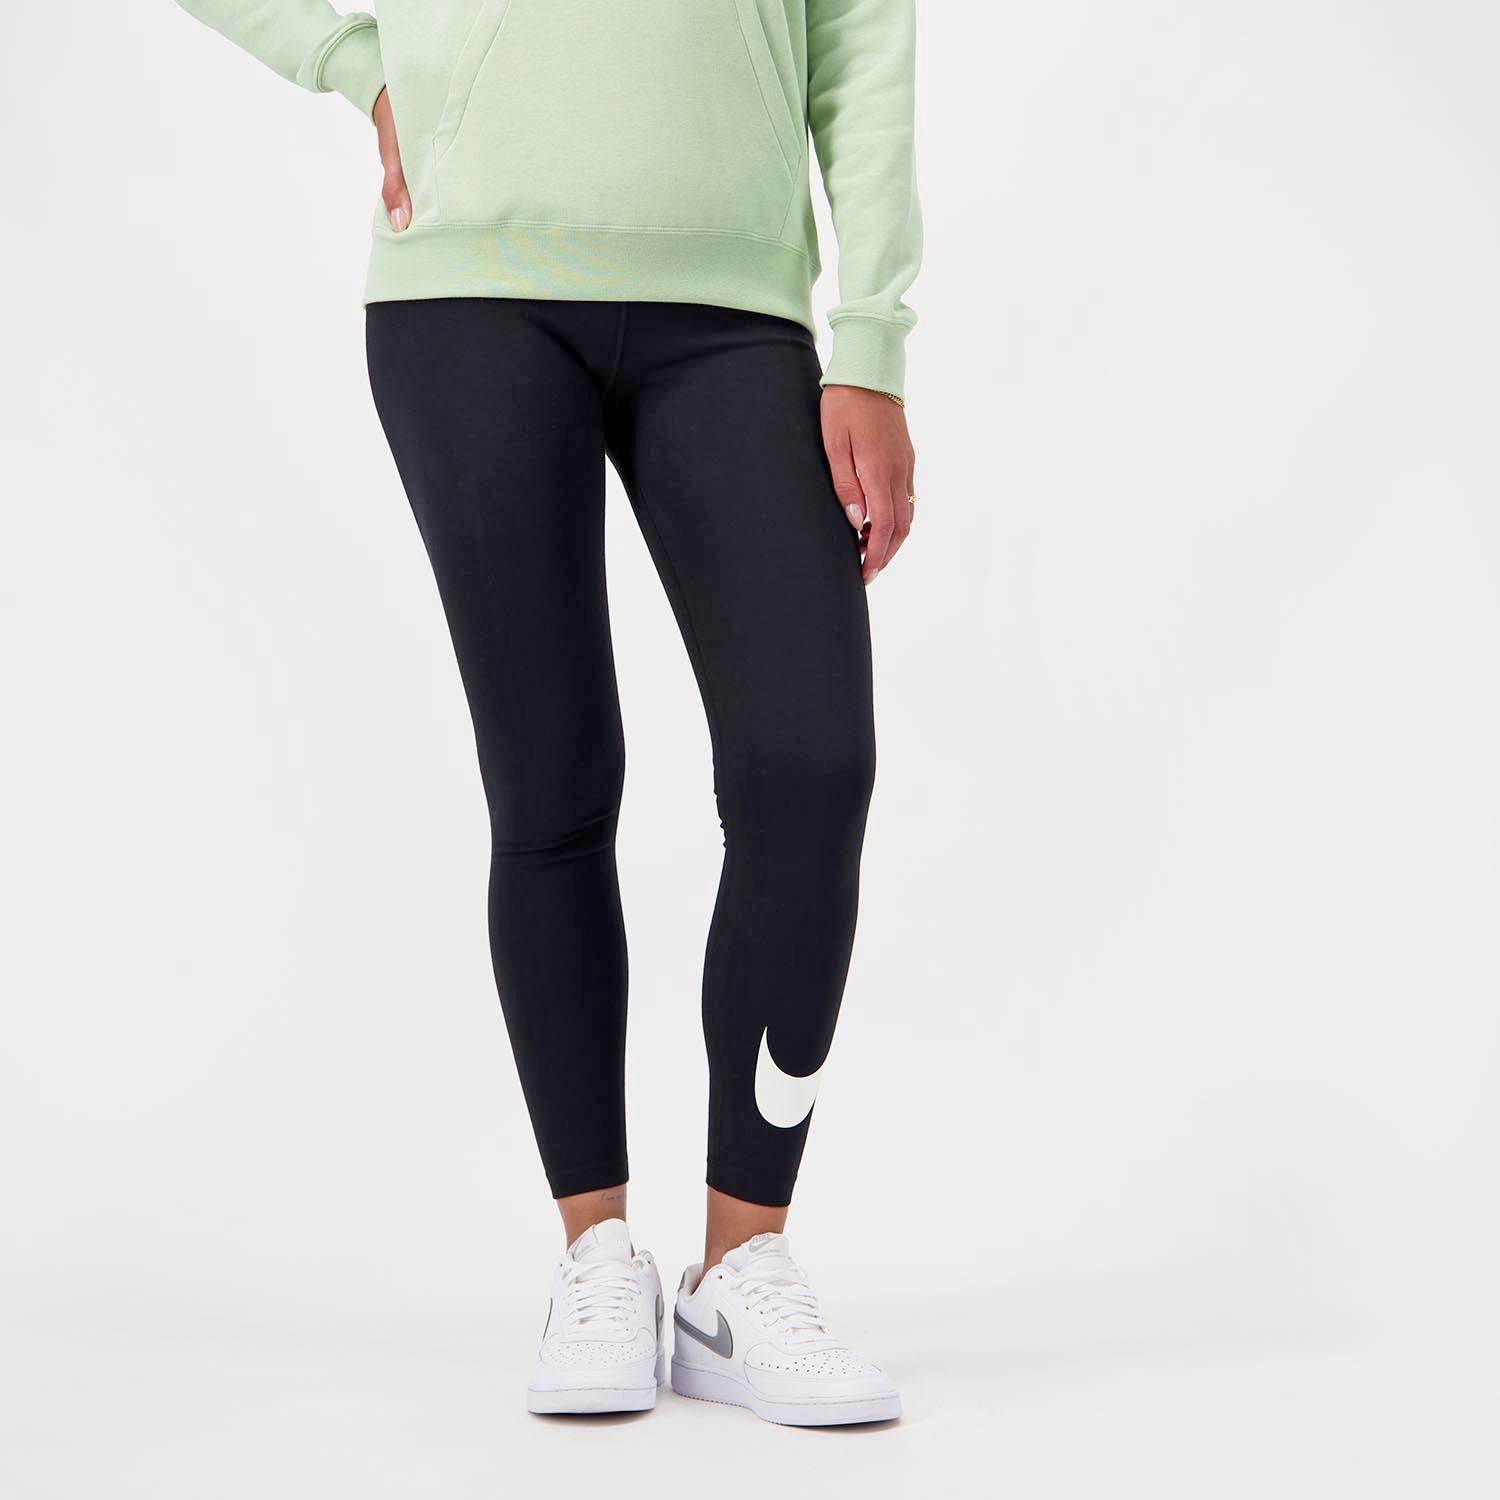 Nike Taper - 49,99 - Mallas Running Hombre talla XL